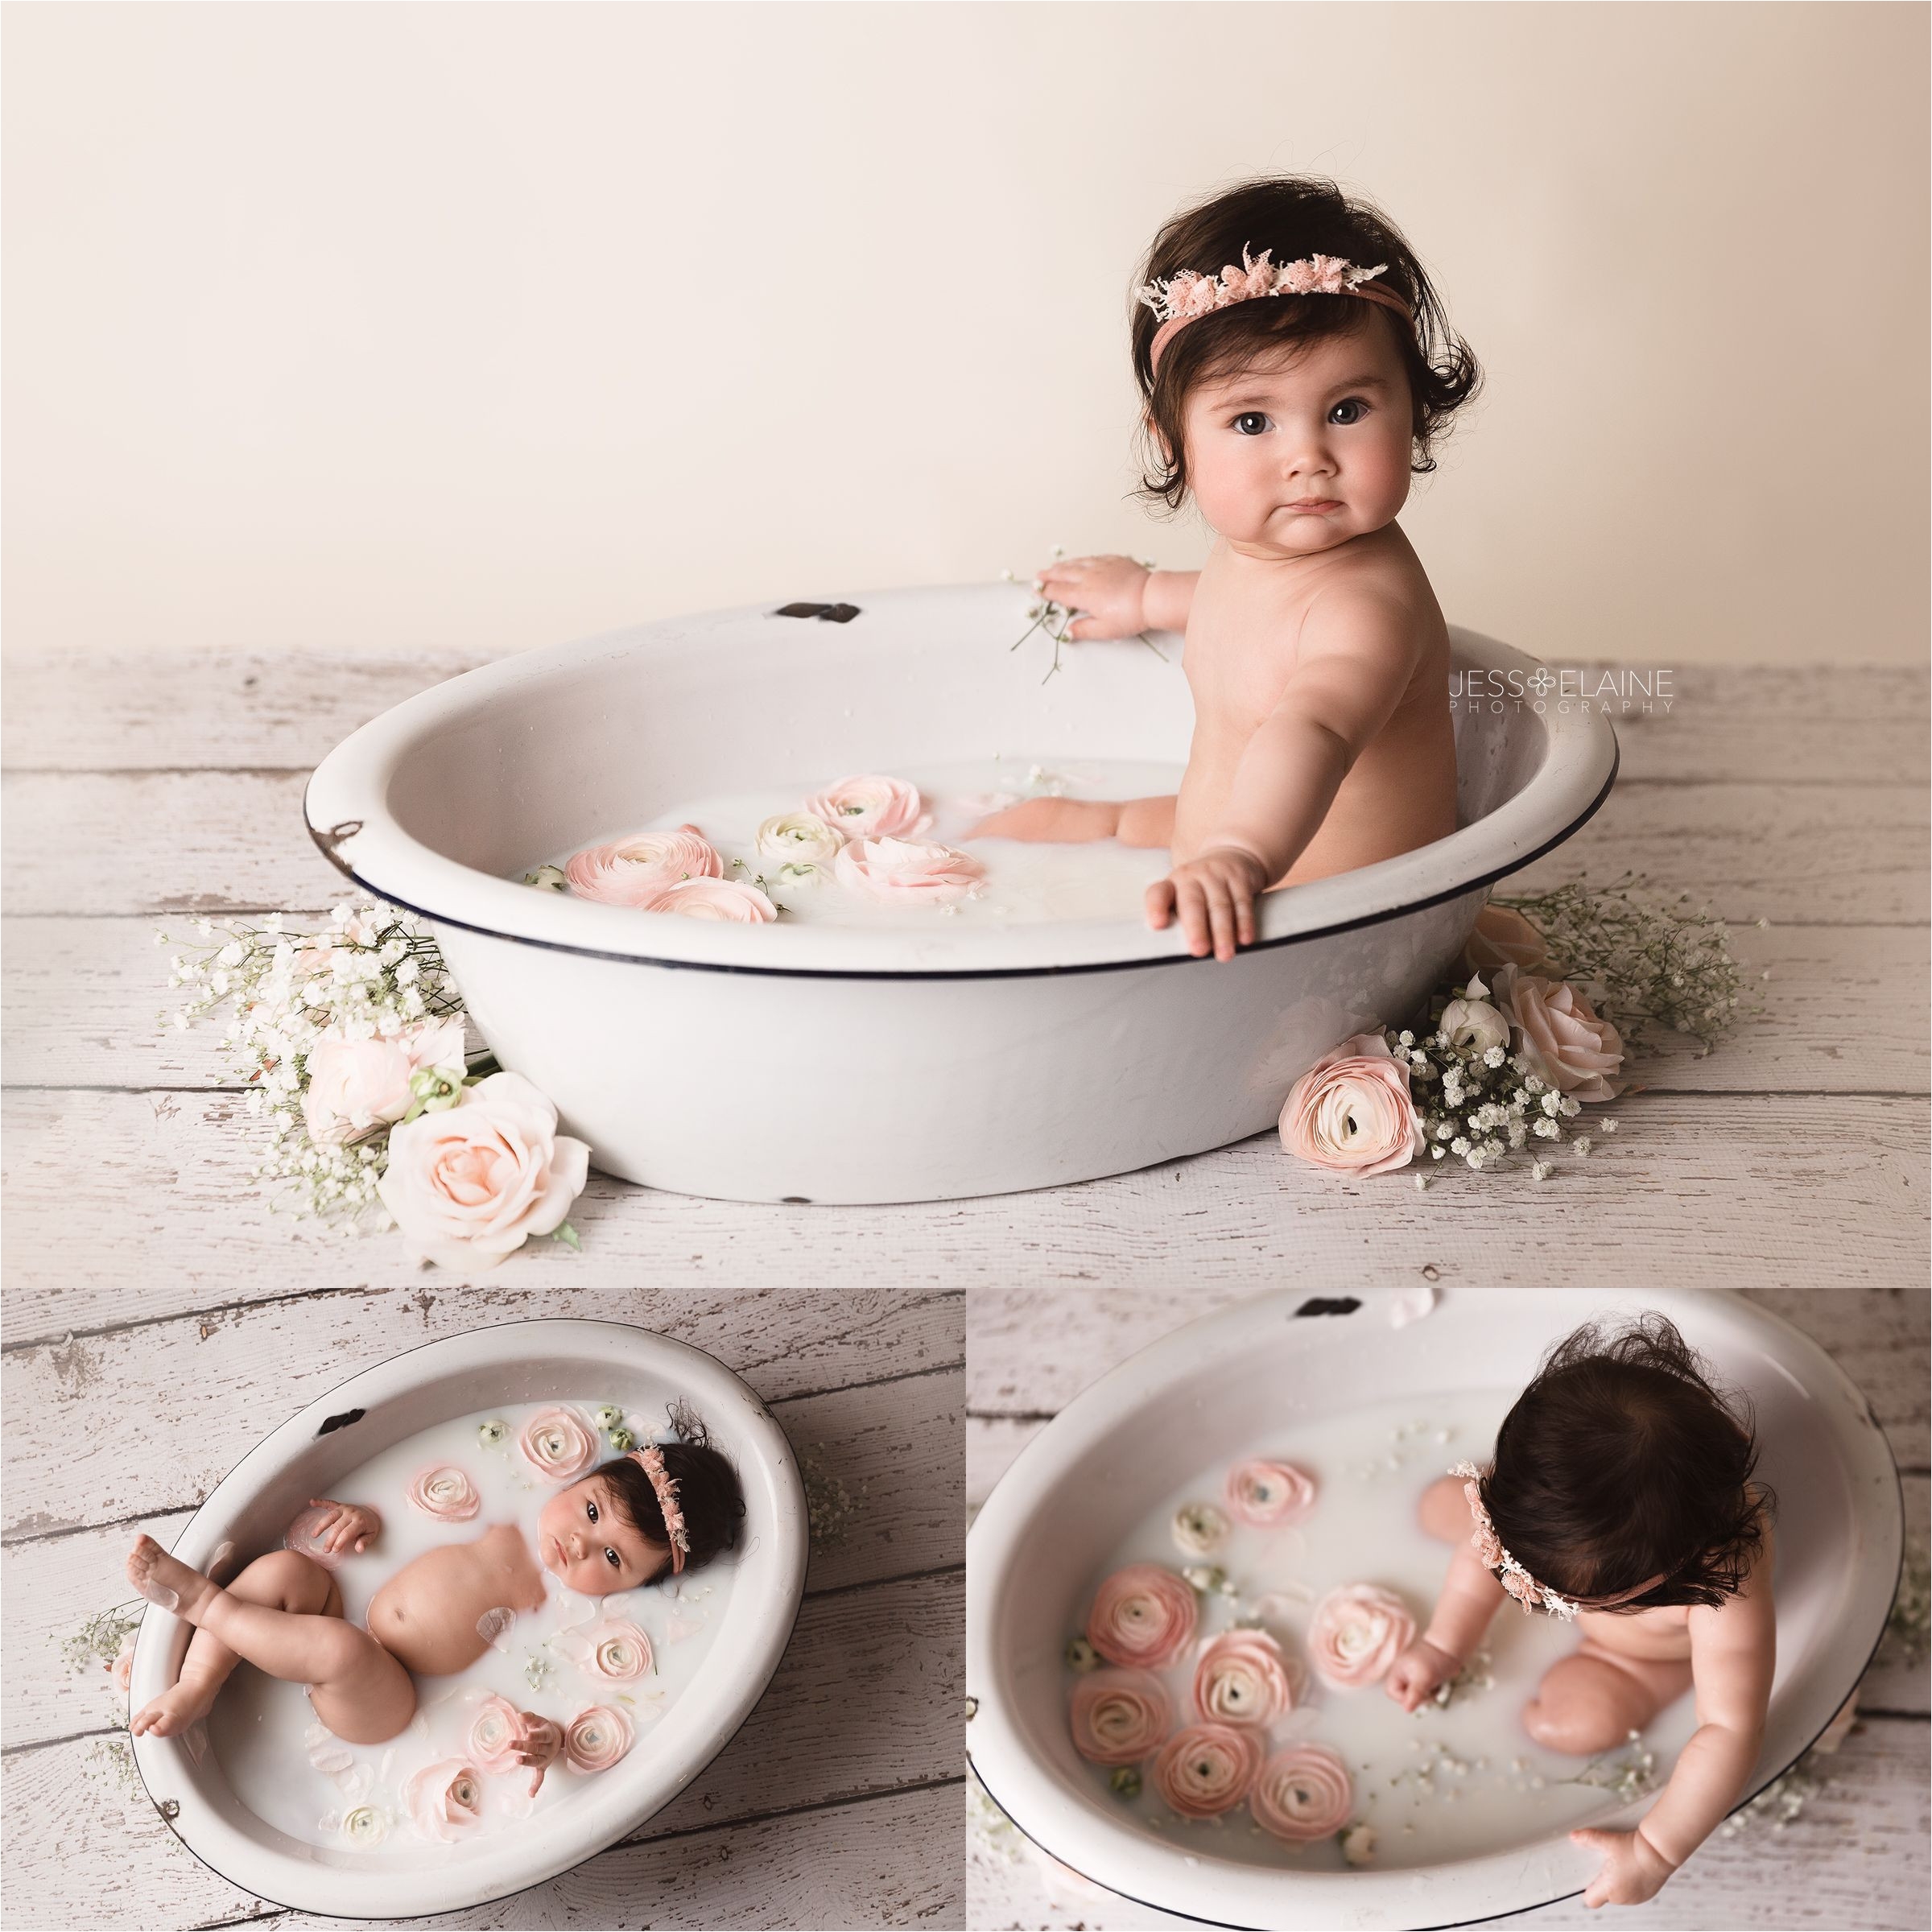 babies and baths lovely baby floral milk bath jess elaine graphy babies and baths fresh